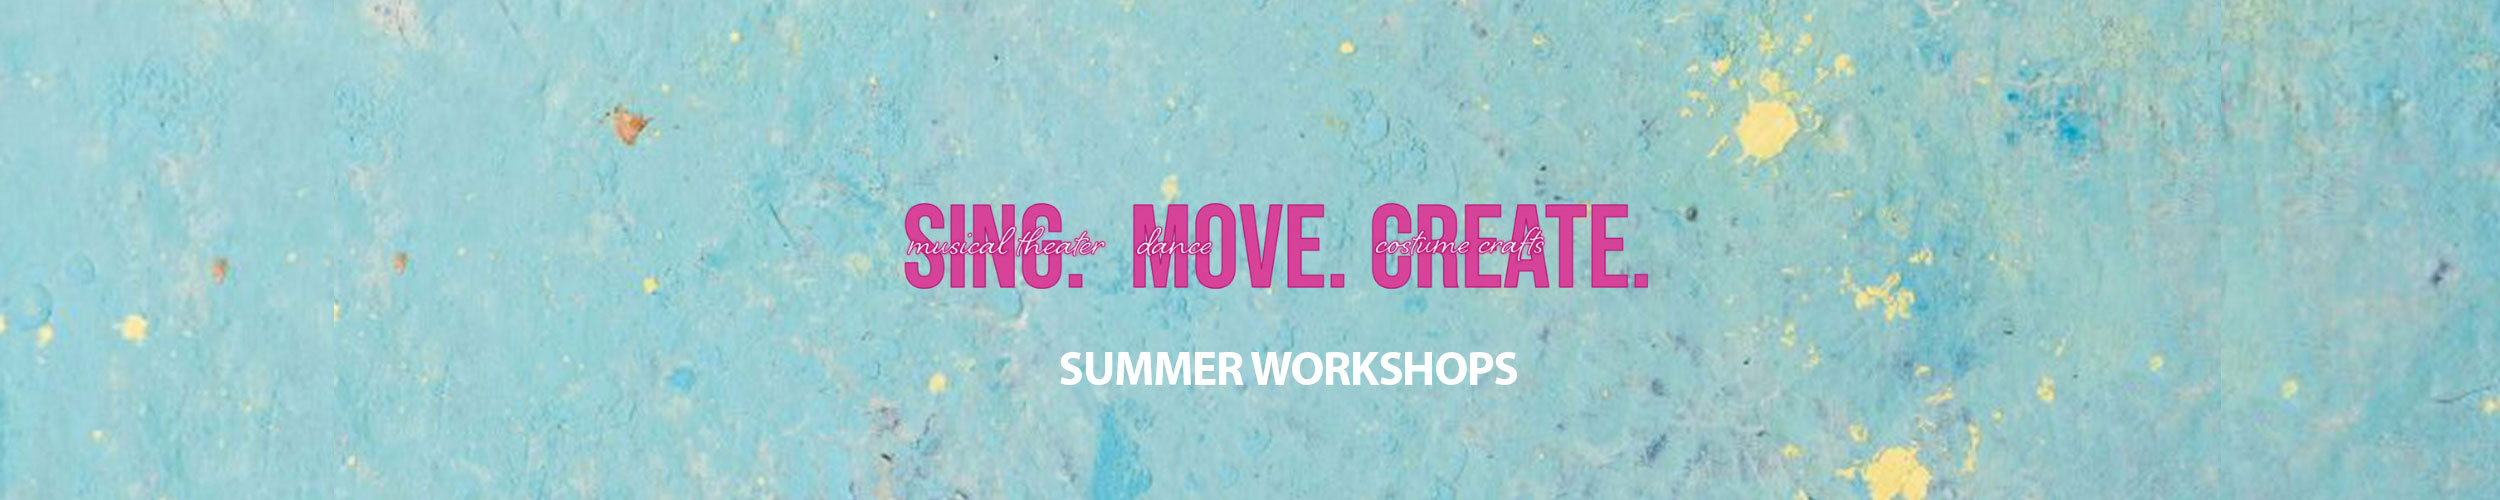 sing, move, create, workshops